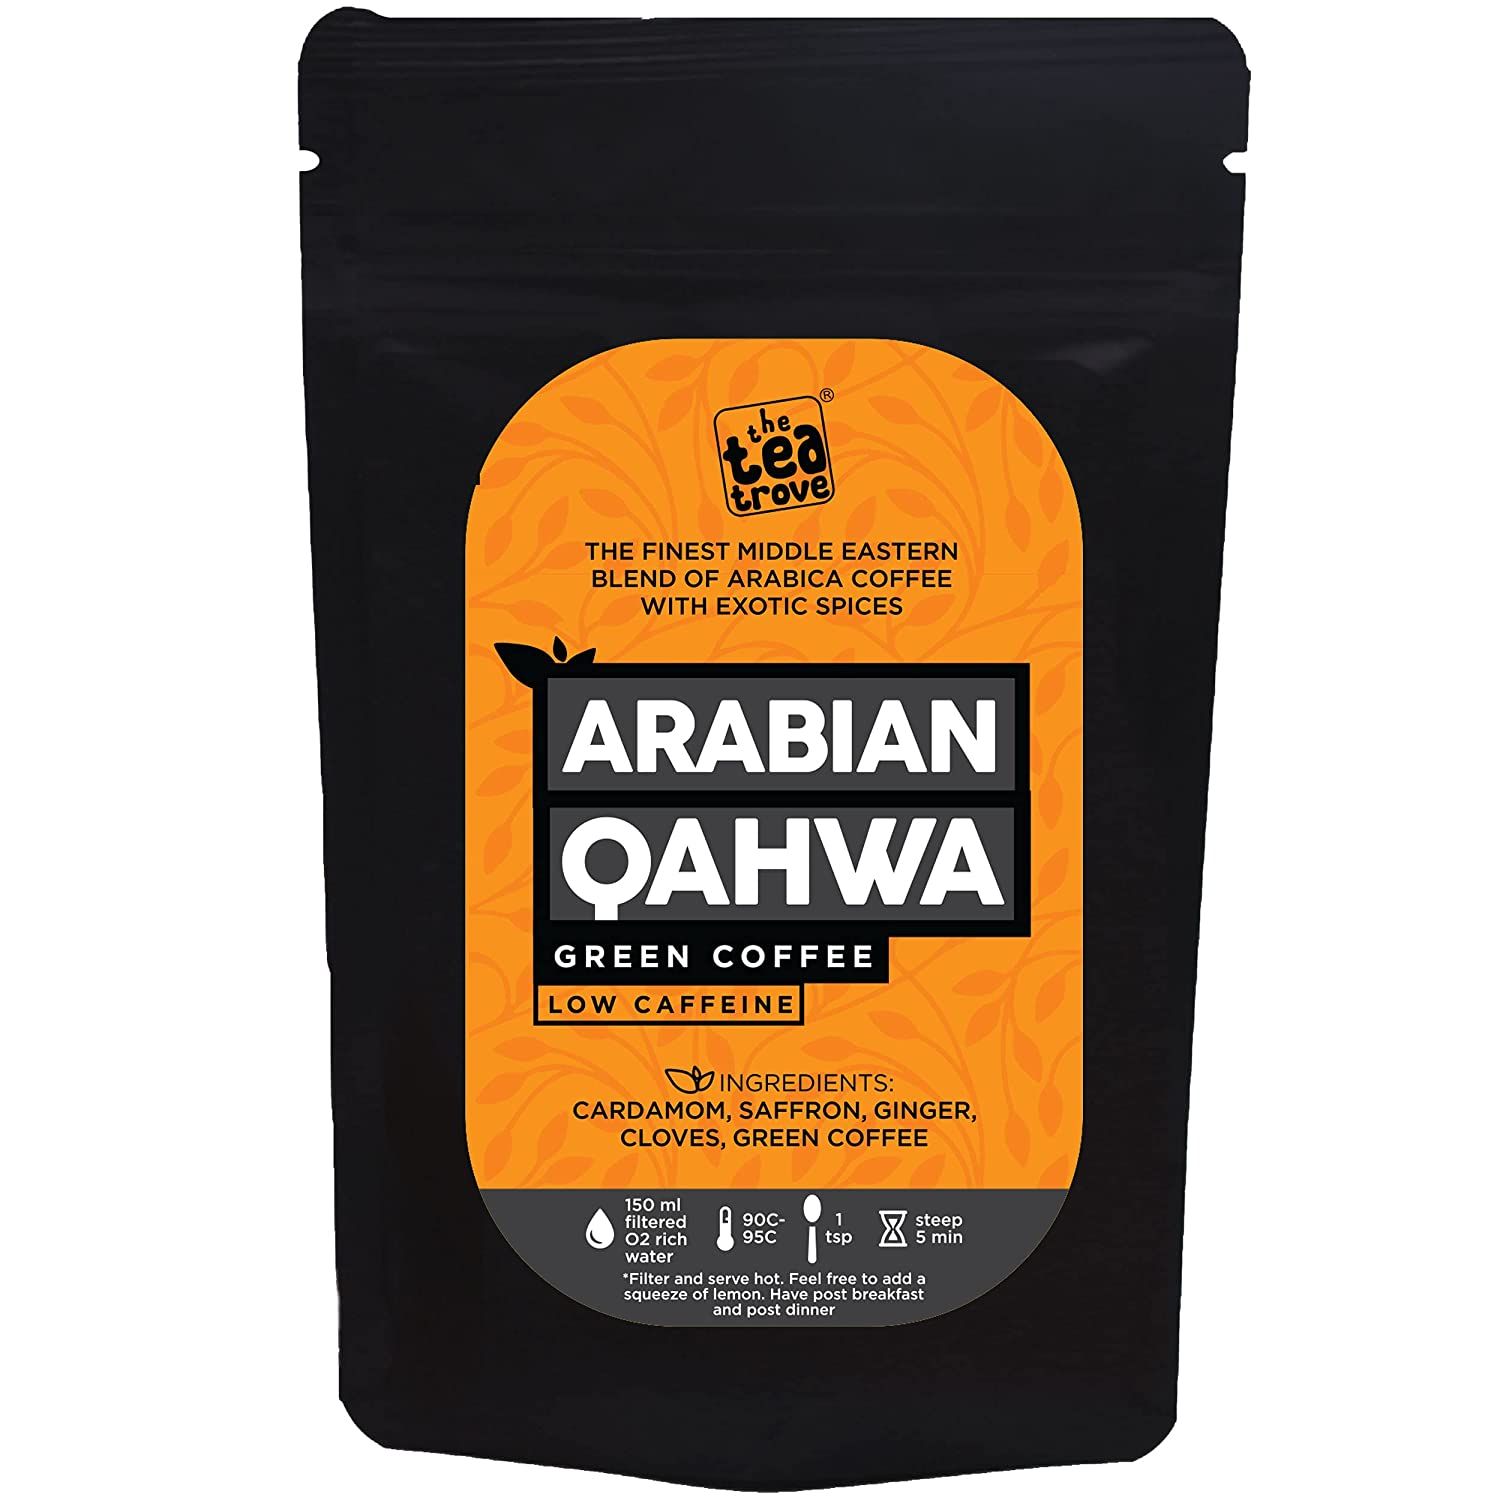 The Tea Trove Arabian Qahwa Green Coffee Image